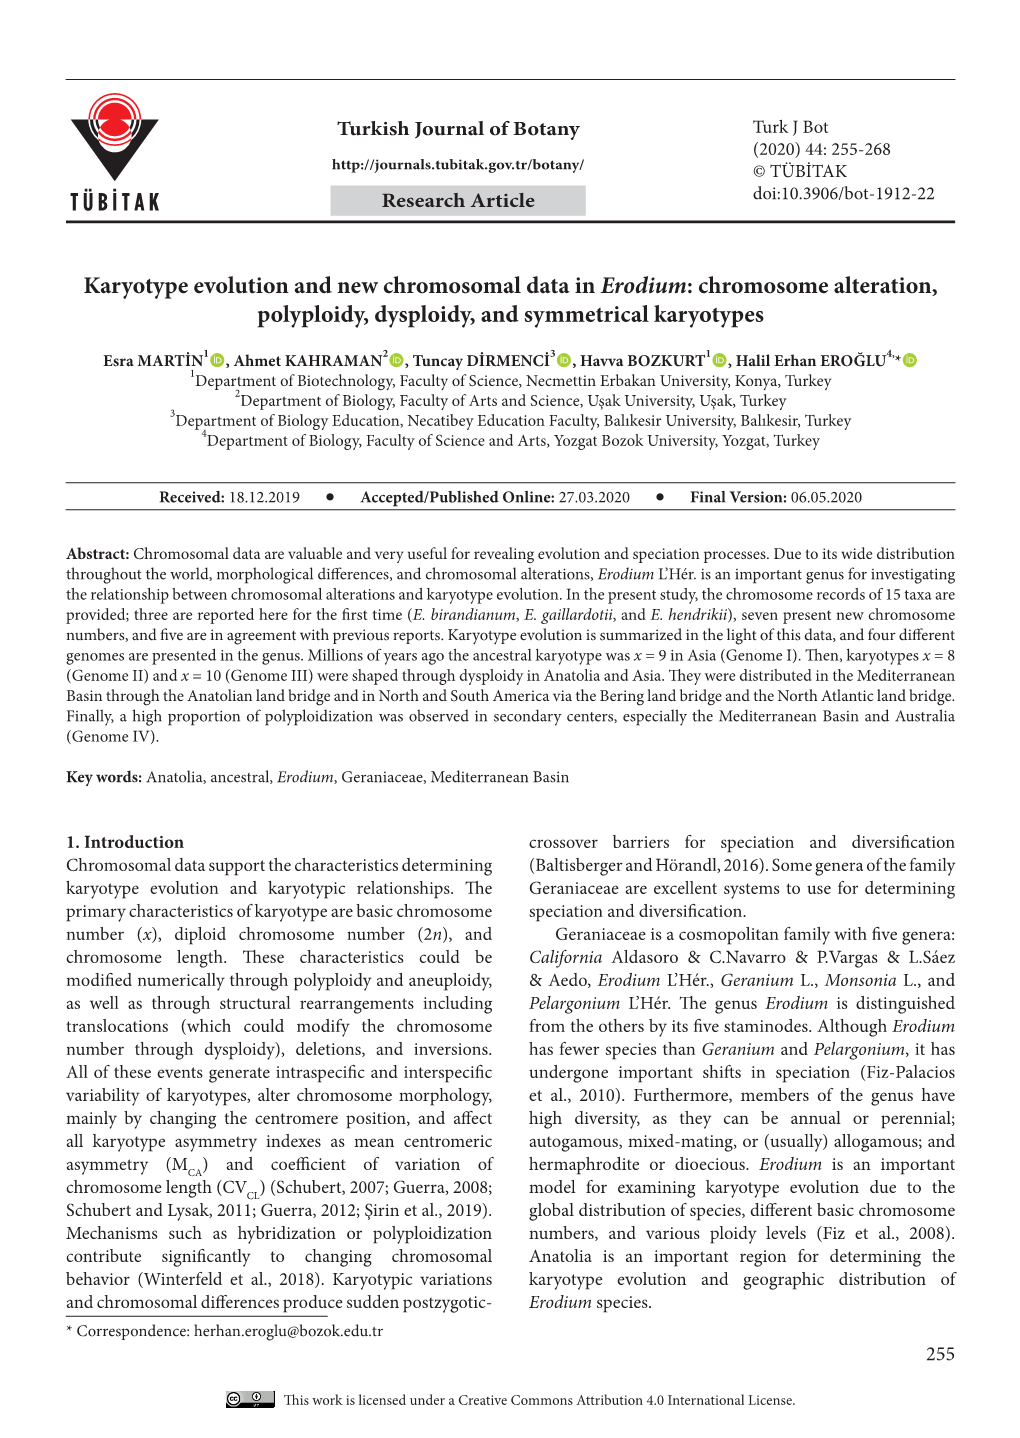 Karyotype Evolution and New Chromosomal Data in Erodium: Chromosome Alteration, Polyploidy, Dysploidy, and Symmetrical Karyotypes